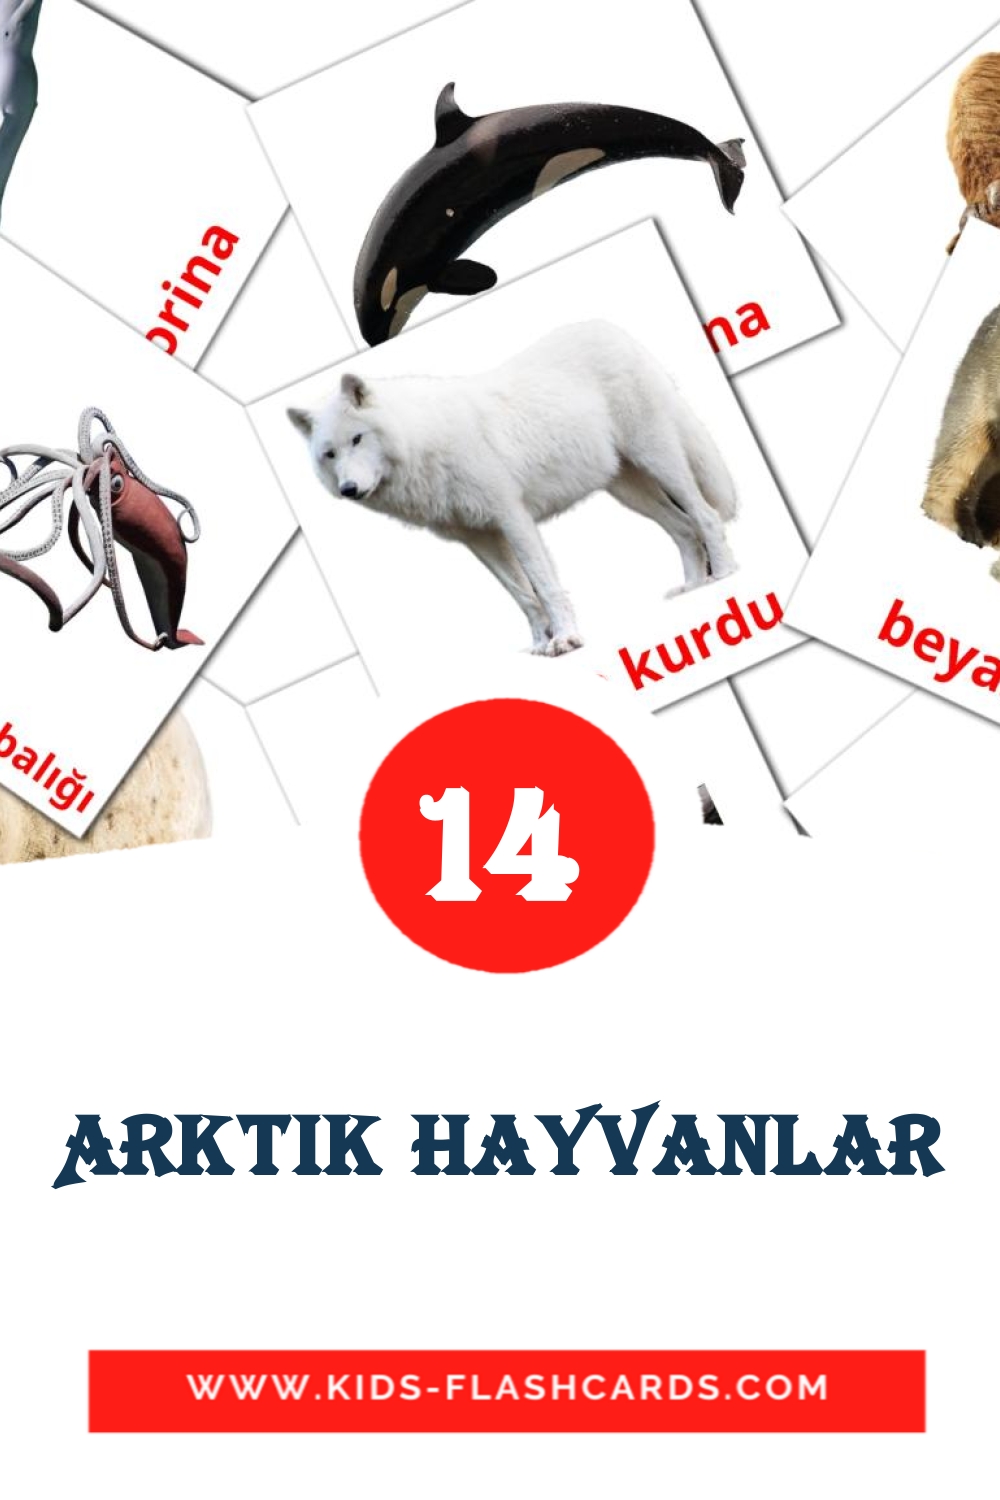 Arktik hayvanlar на турецком для Детского Сада (14 карточек)